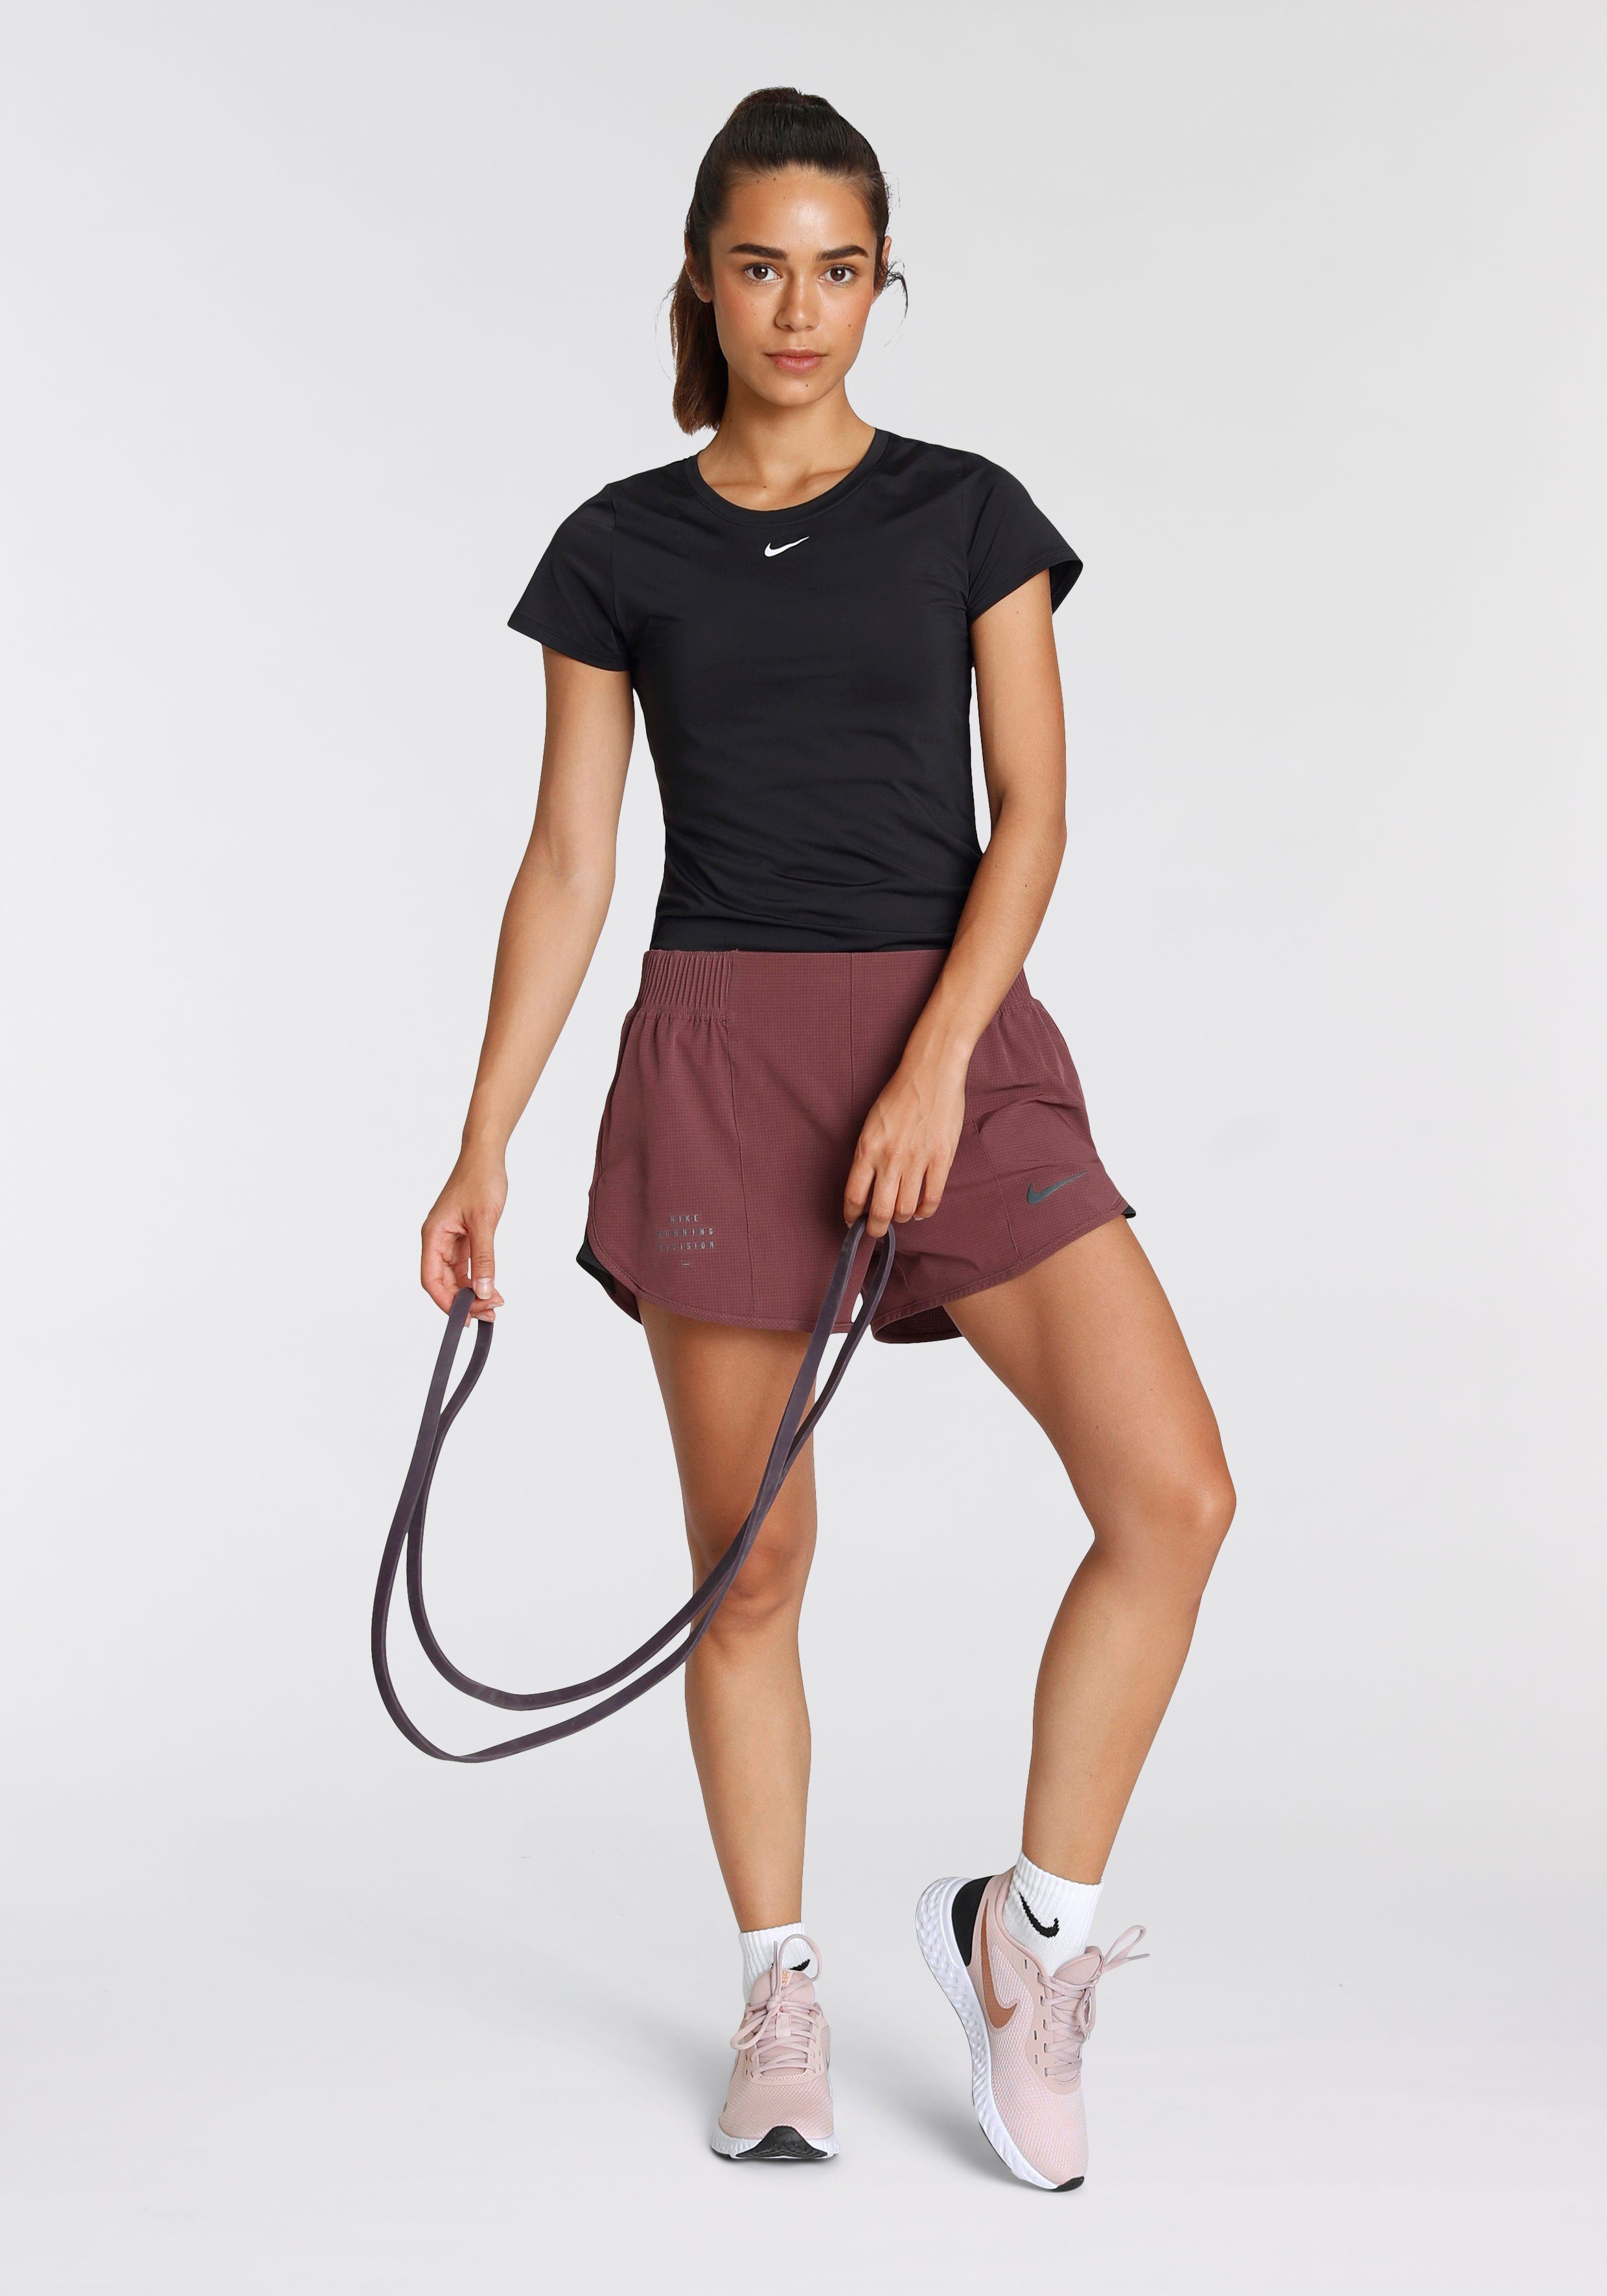 schwarz SLIM FIT SHORT-SLEEVE ONE TOP Trainingsshirt WOMEN'S DRI-FIT Nike